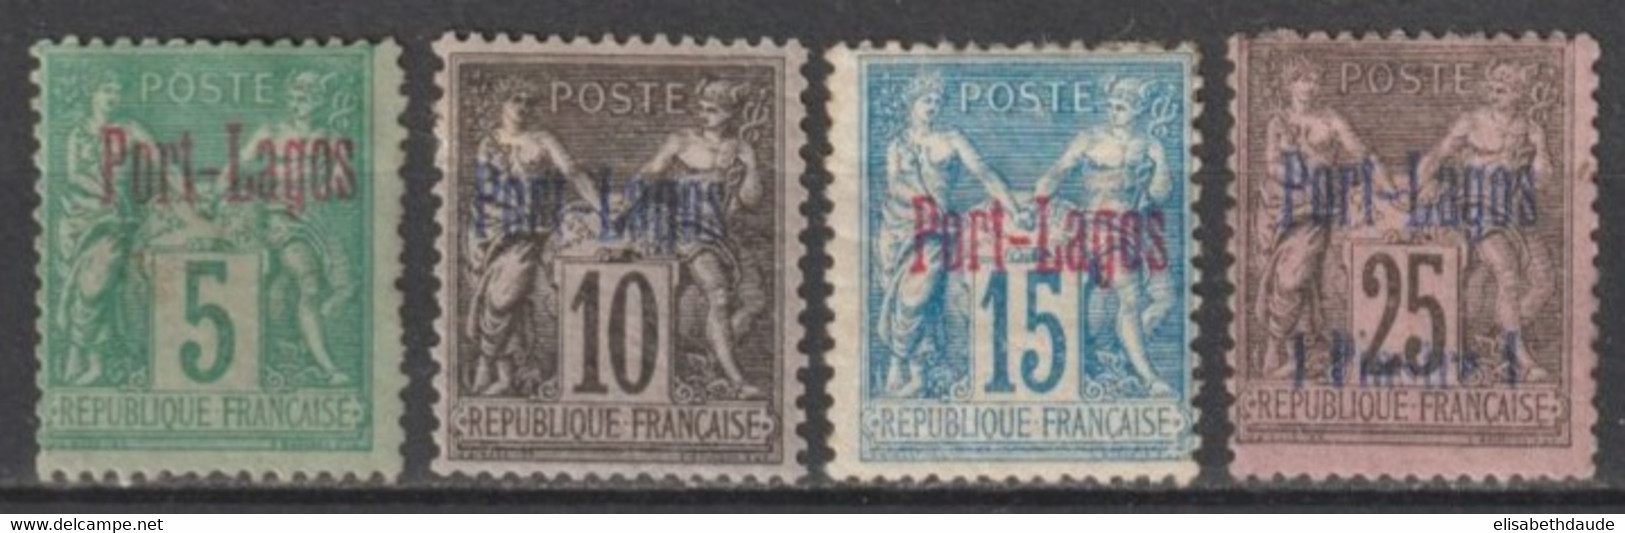 PORT LAGOS - 1893 - YVERT N° 1/4 * MH CHARNIERE ASSEZ FORTE - COTE = 335 EUR. - Neufs